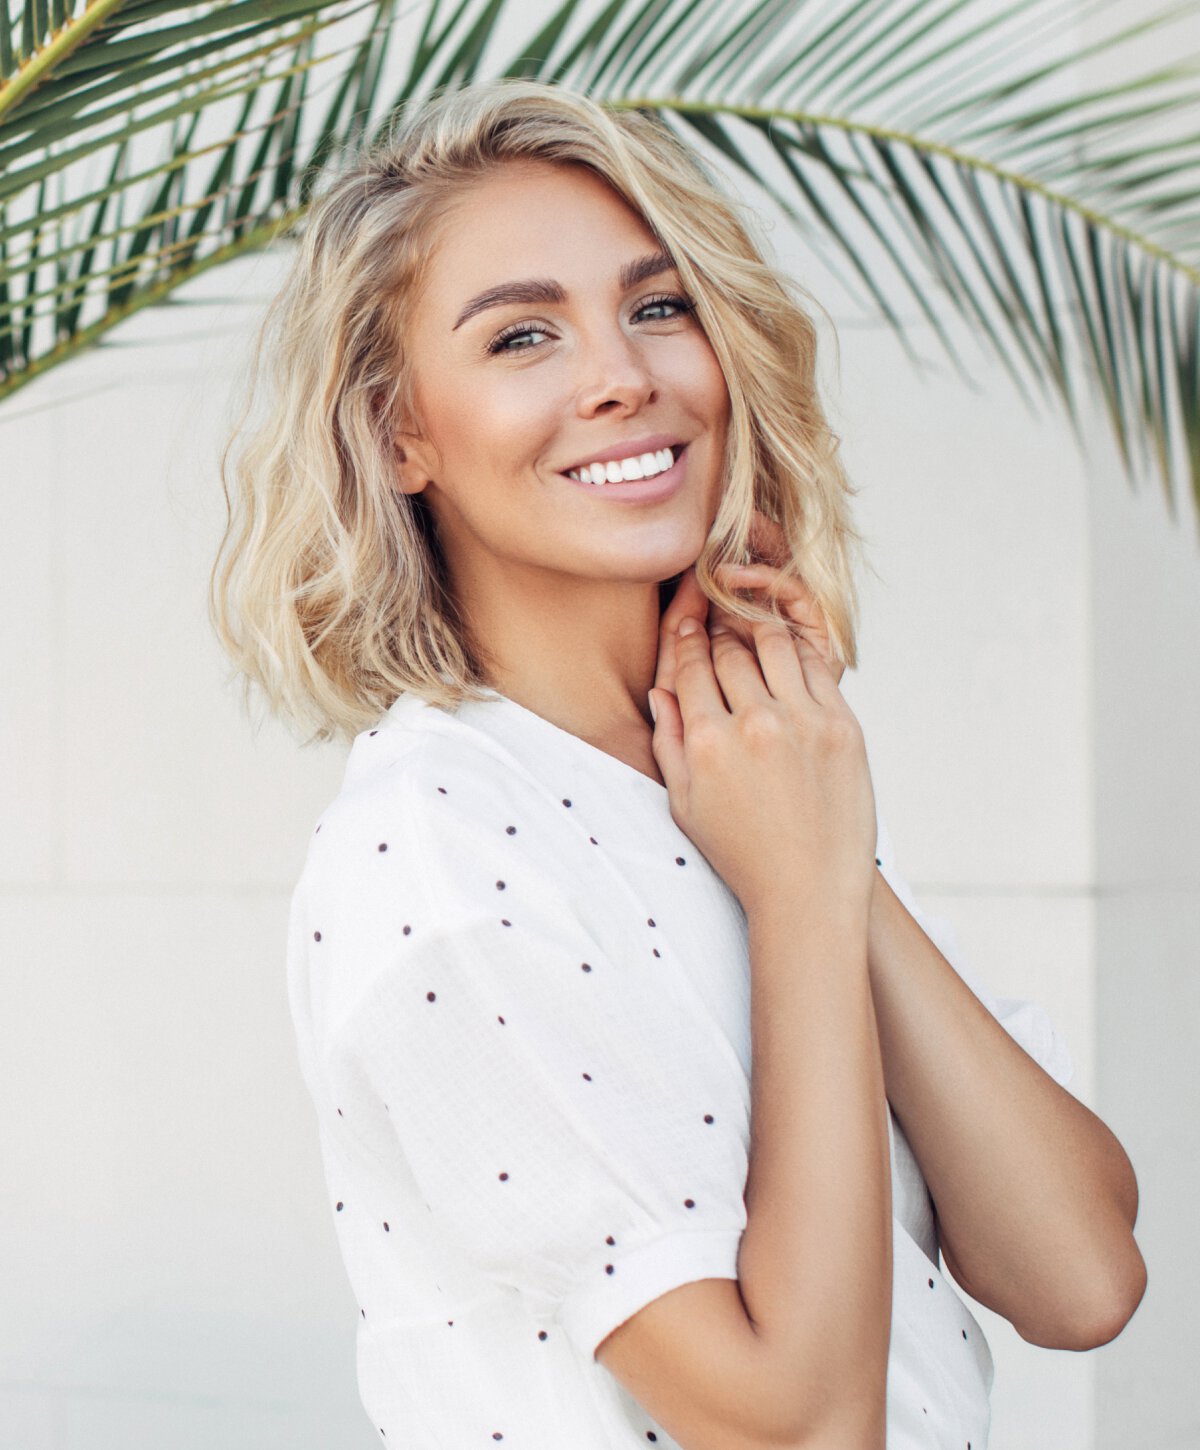 Los Angeles cutera model with blonde hair